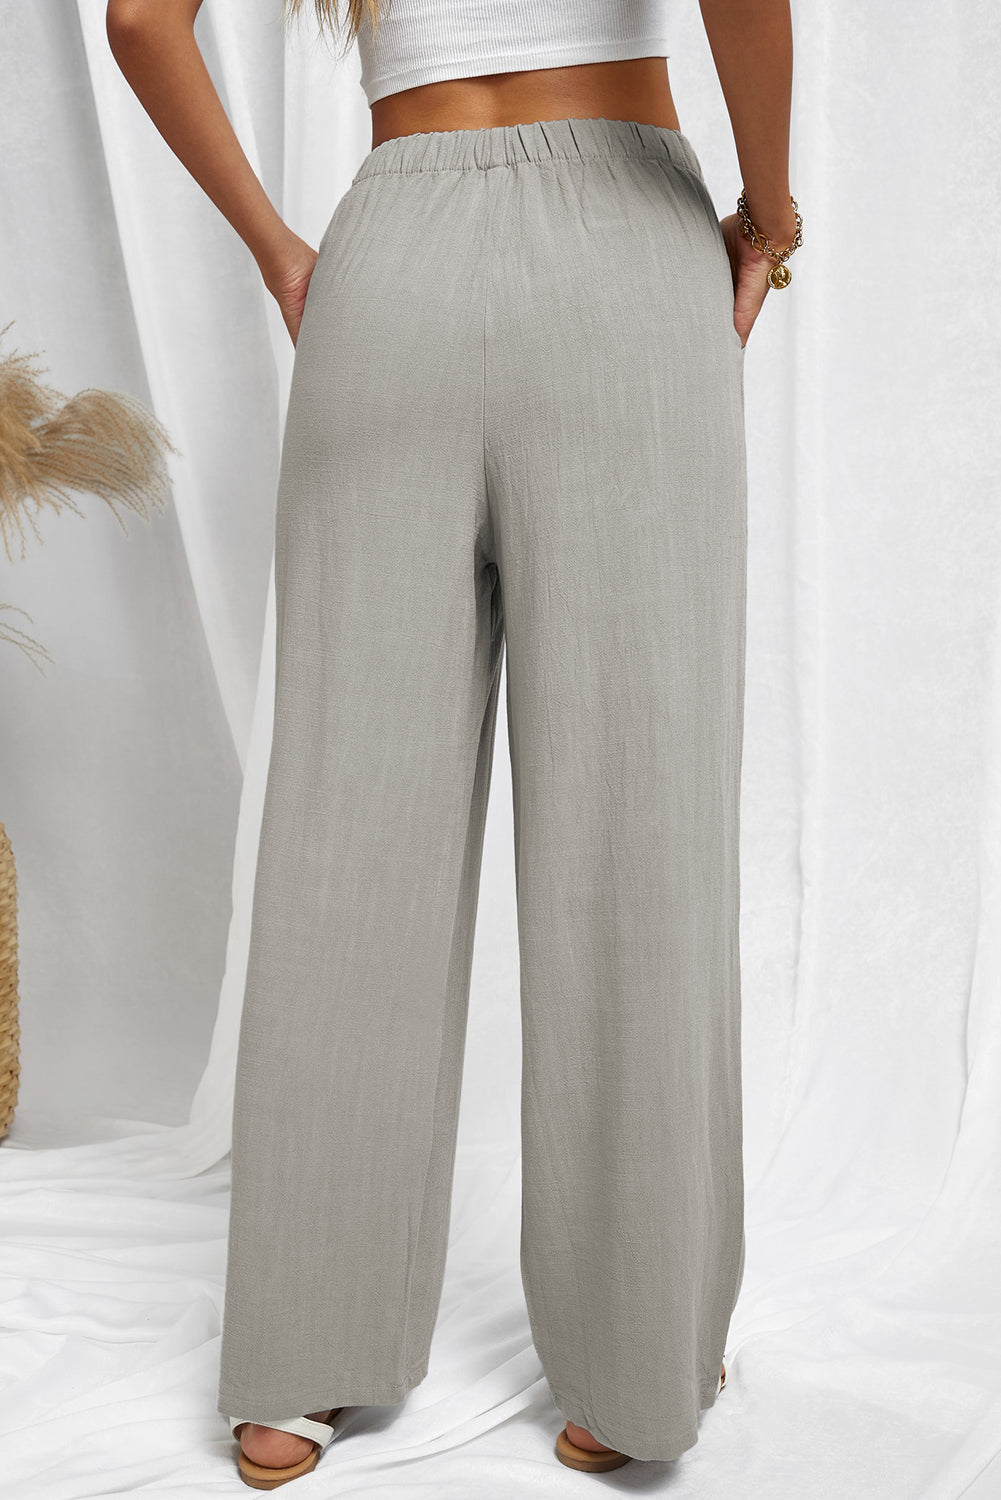 Drawstring Elastic Waist Pants with Pockets - Bottoms - Pants - 12 - 2024